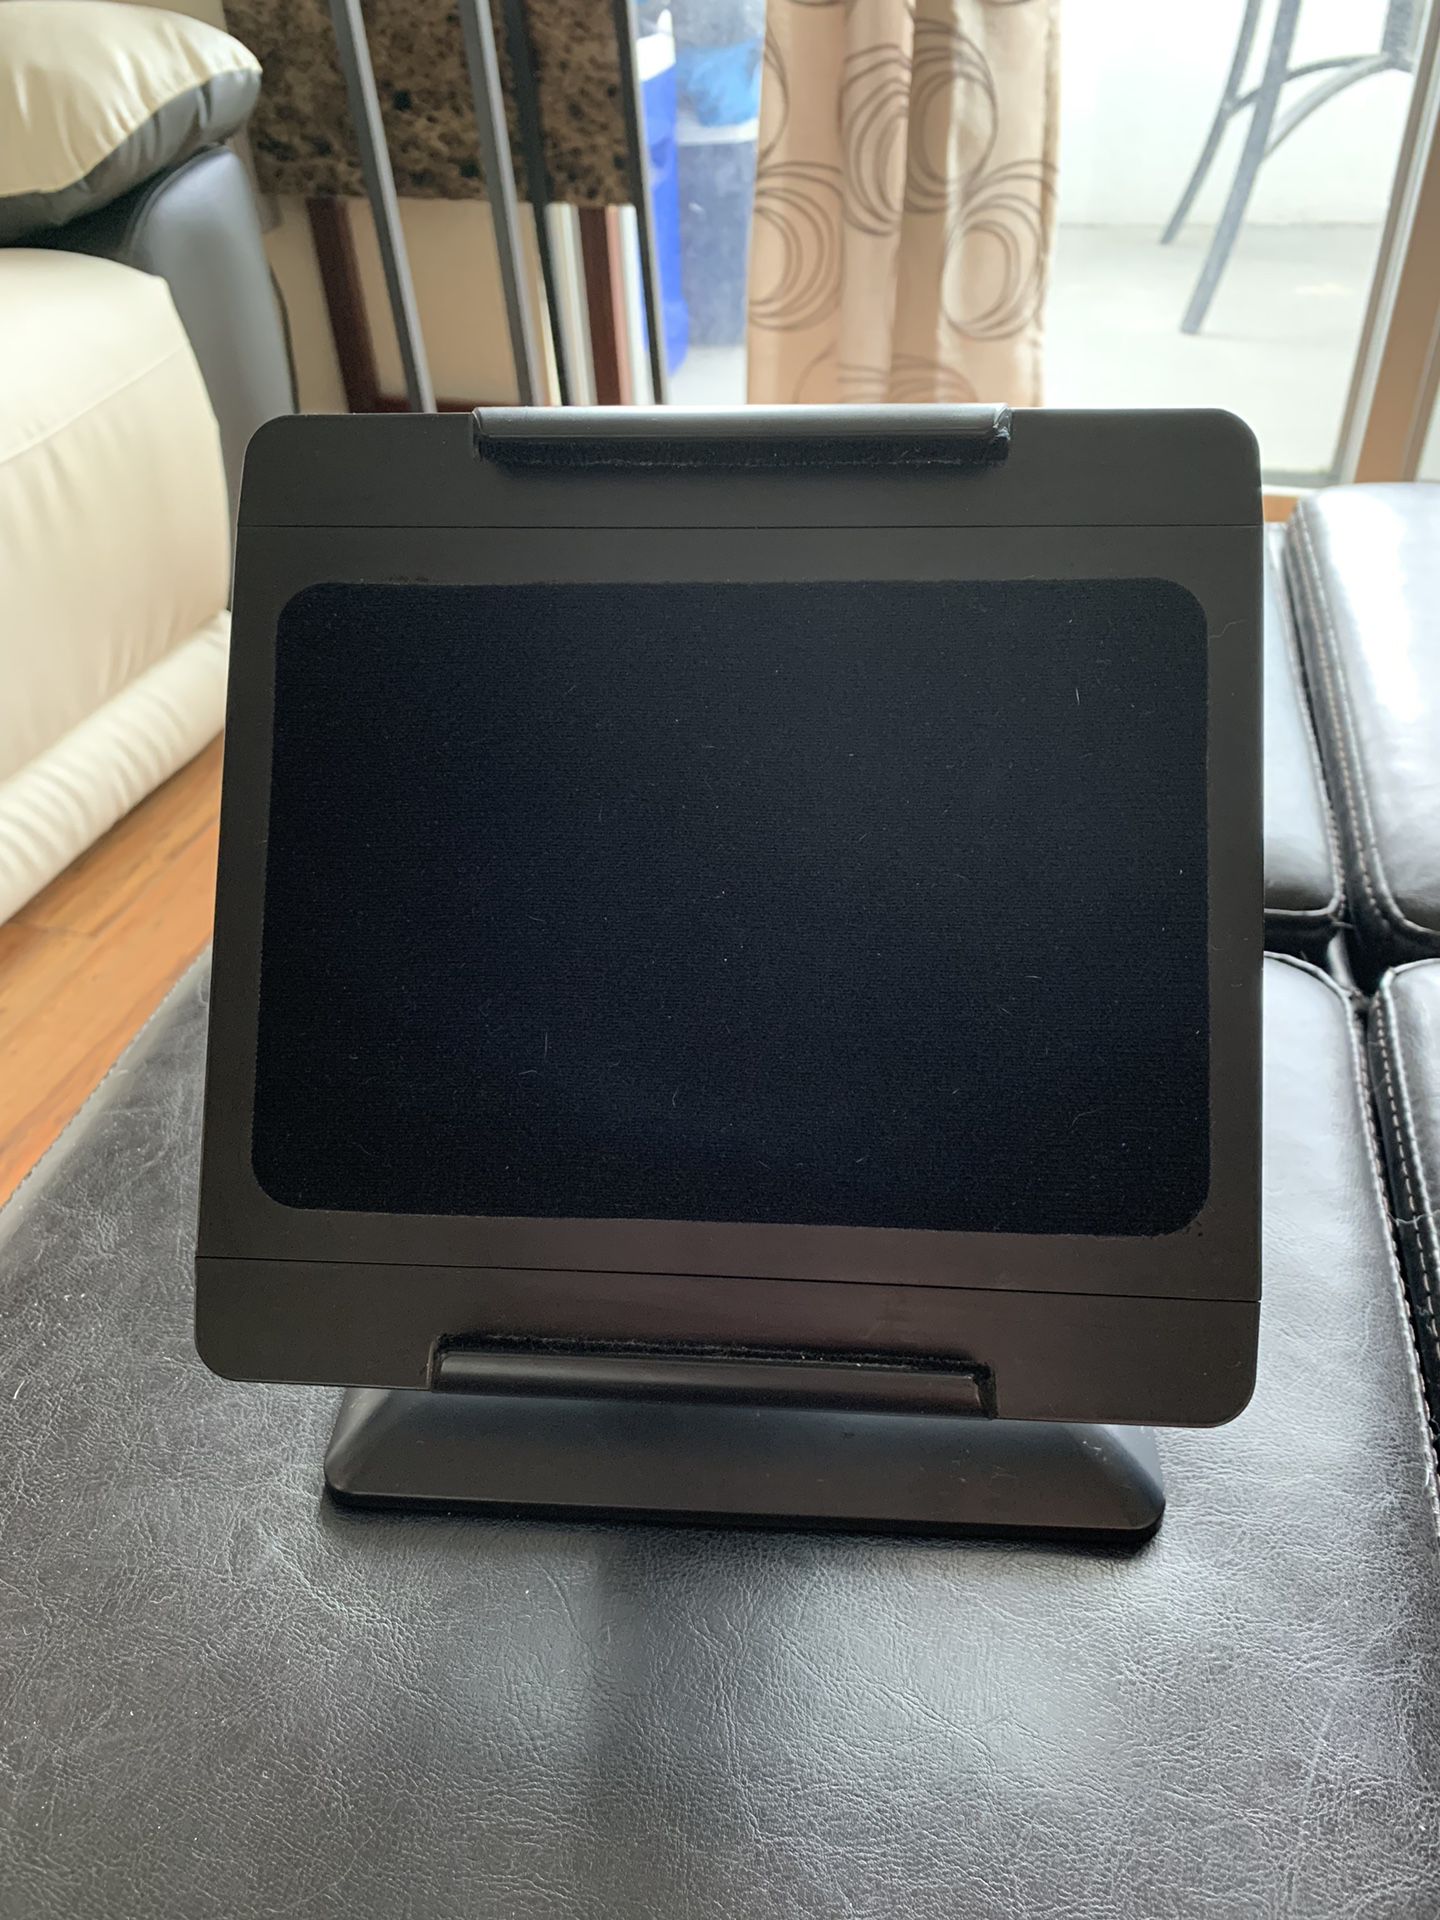 Adjustable Ipad Air stand